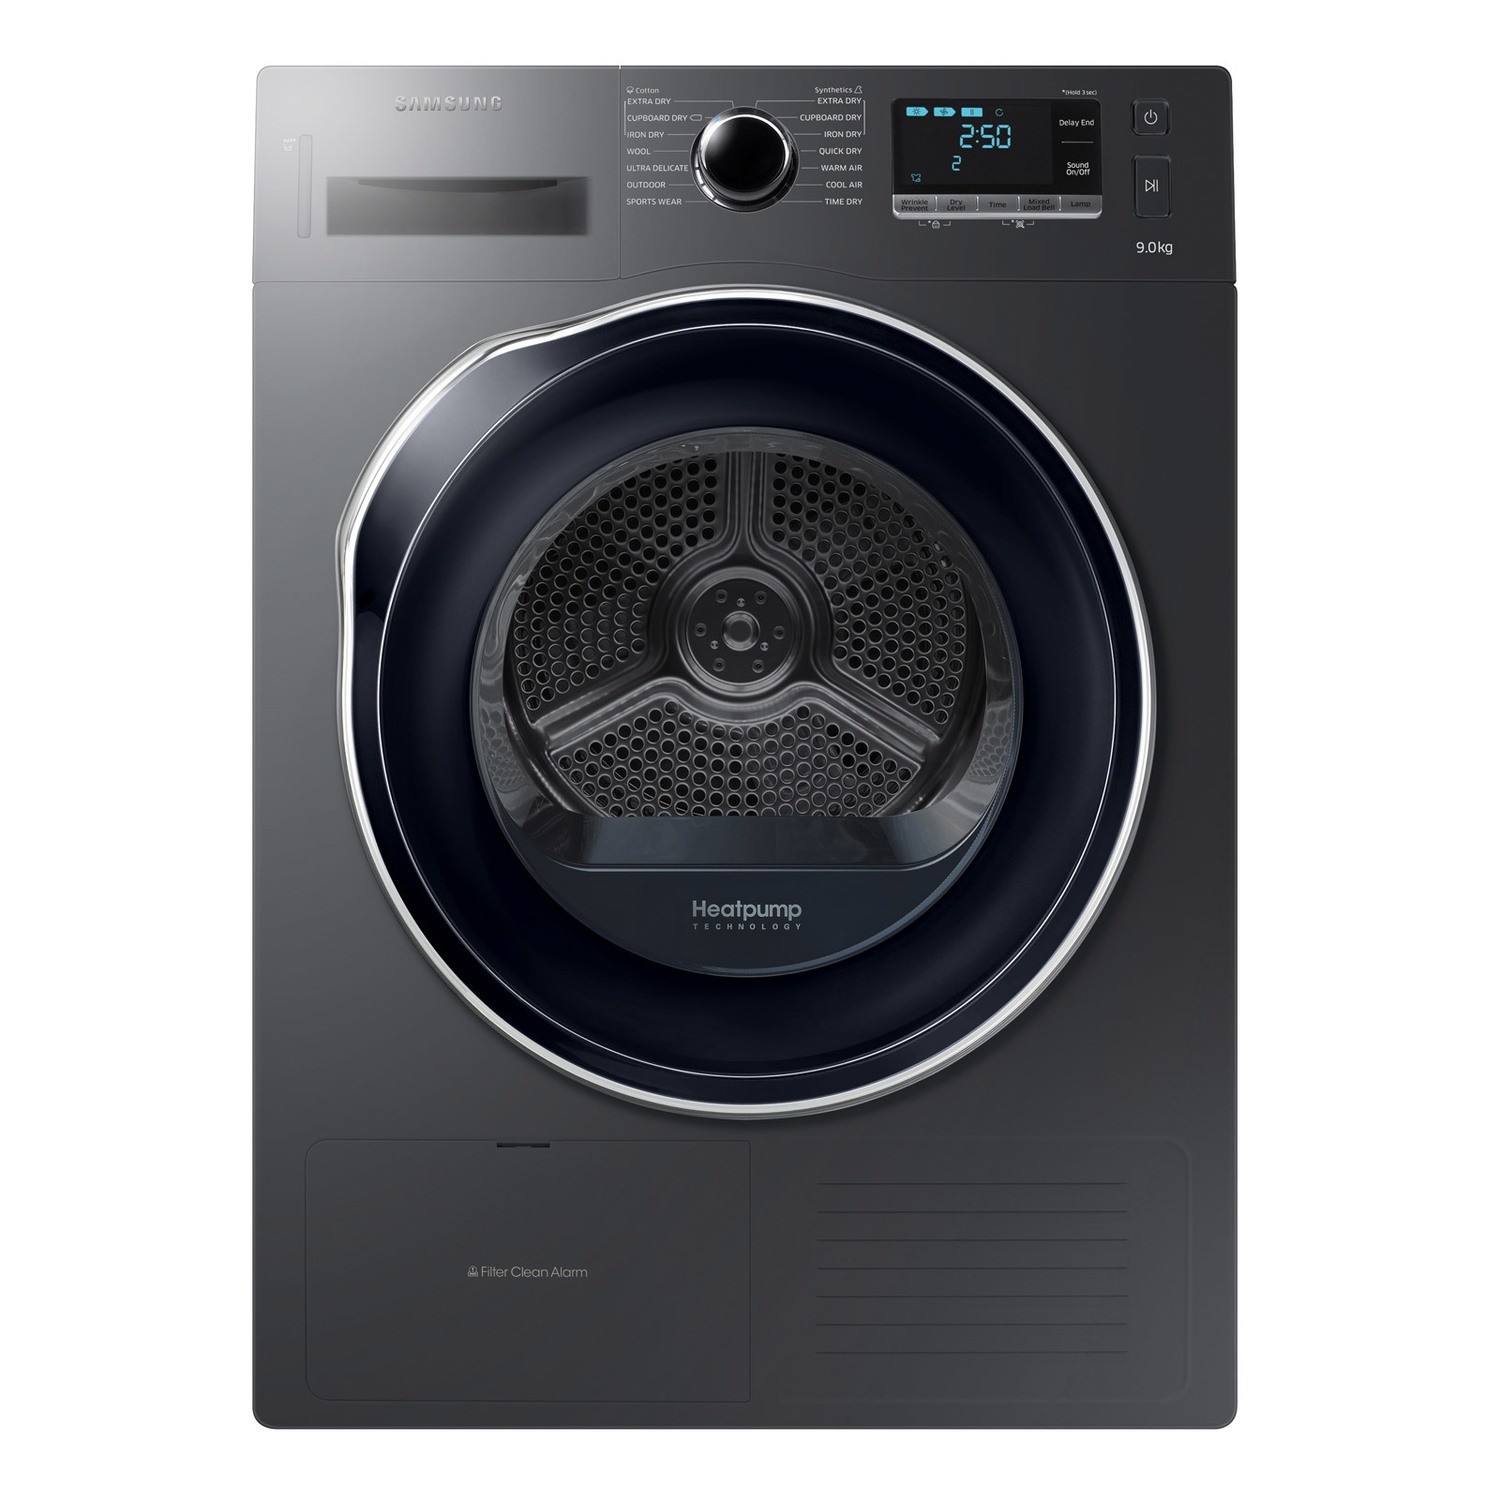 Samsung DV90K6000 Tumble Dryer with Heat Pump Technology, 9 kg